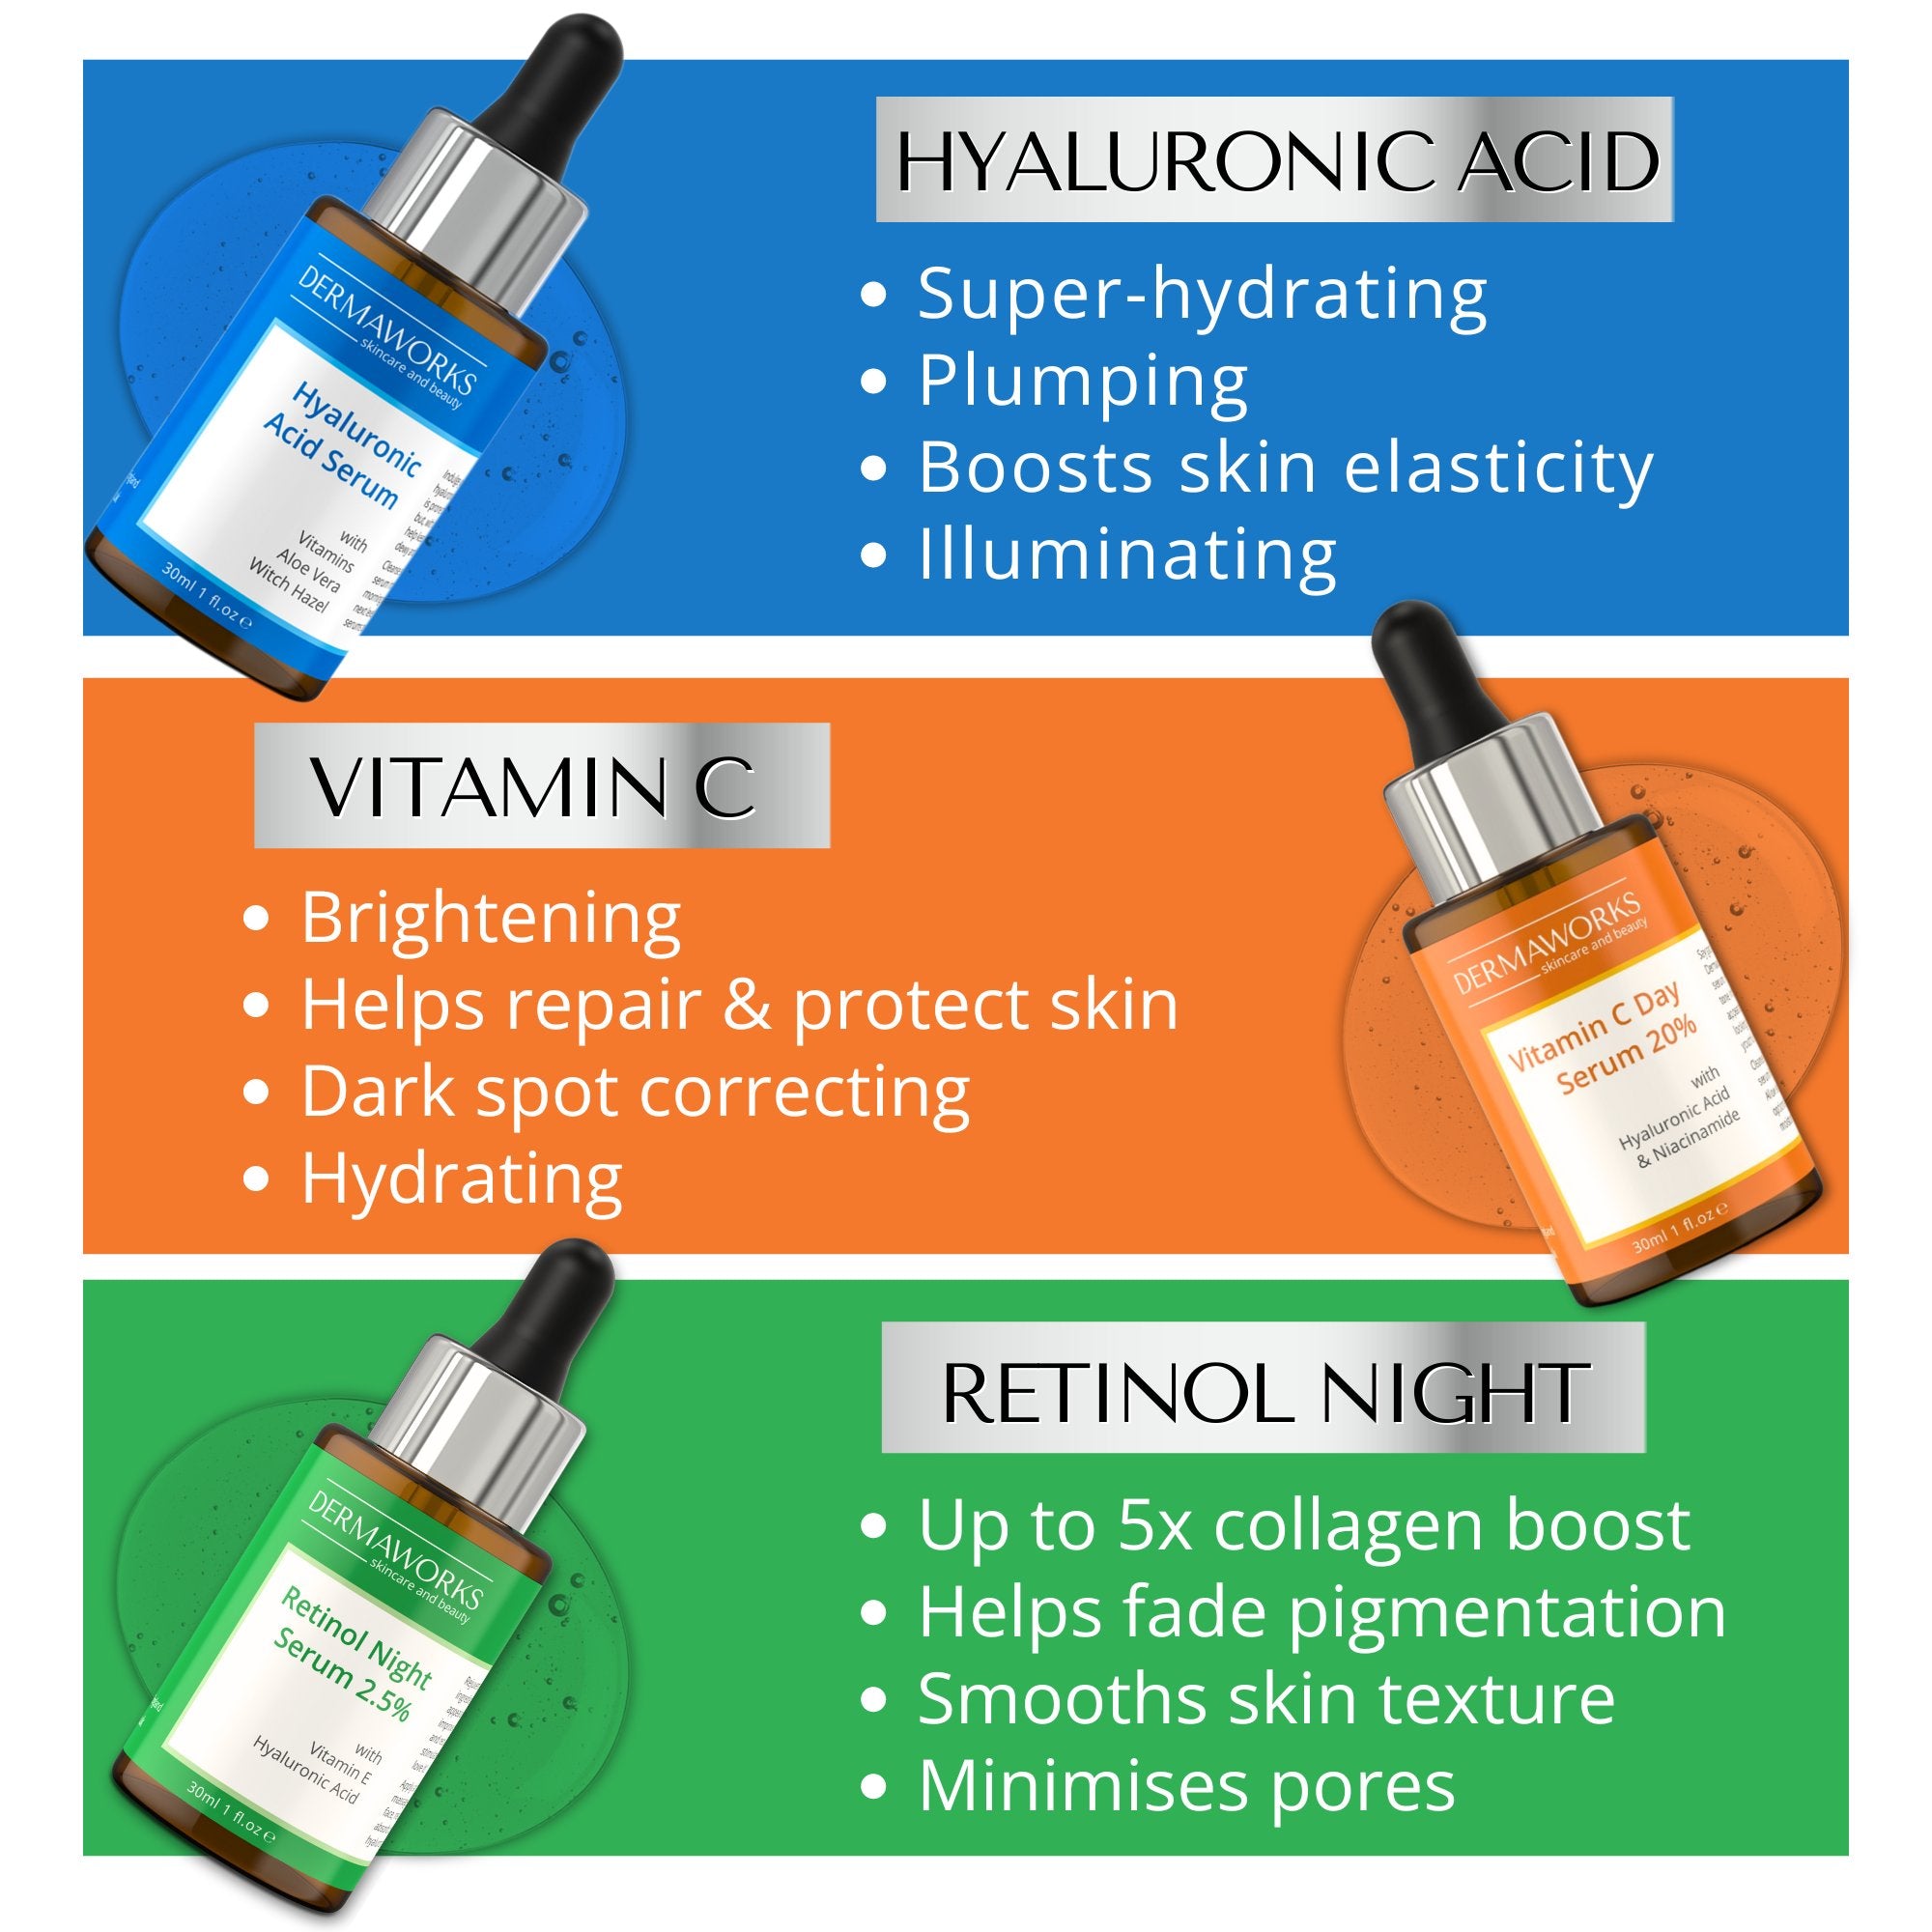 Dermaworks skin serum set features hydrating hyaluronic acid, brightening vitamin C serum for face and anti-aging, collagen booster retinol.